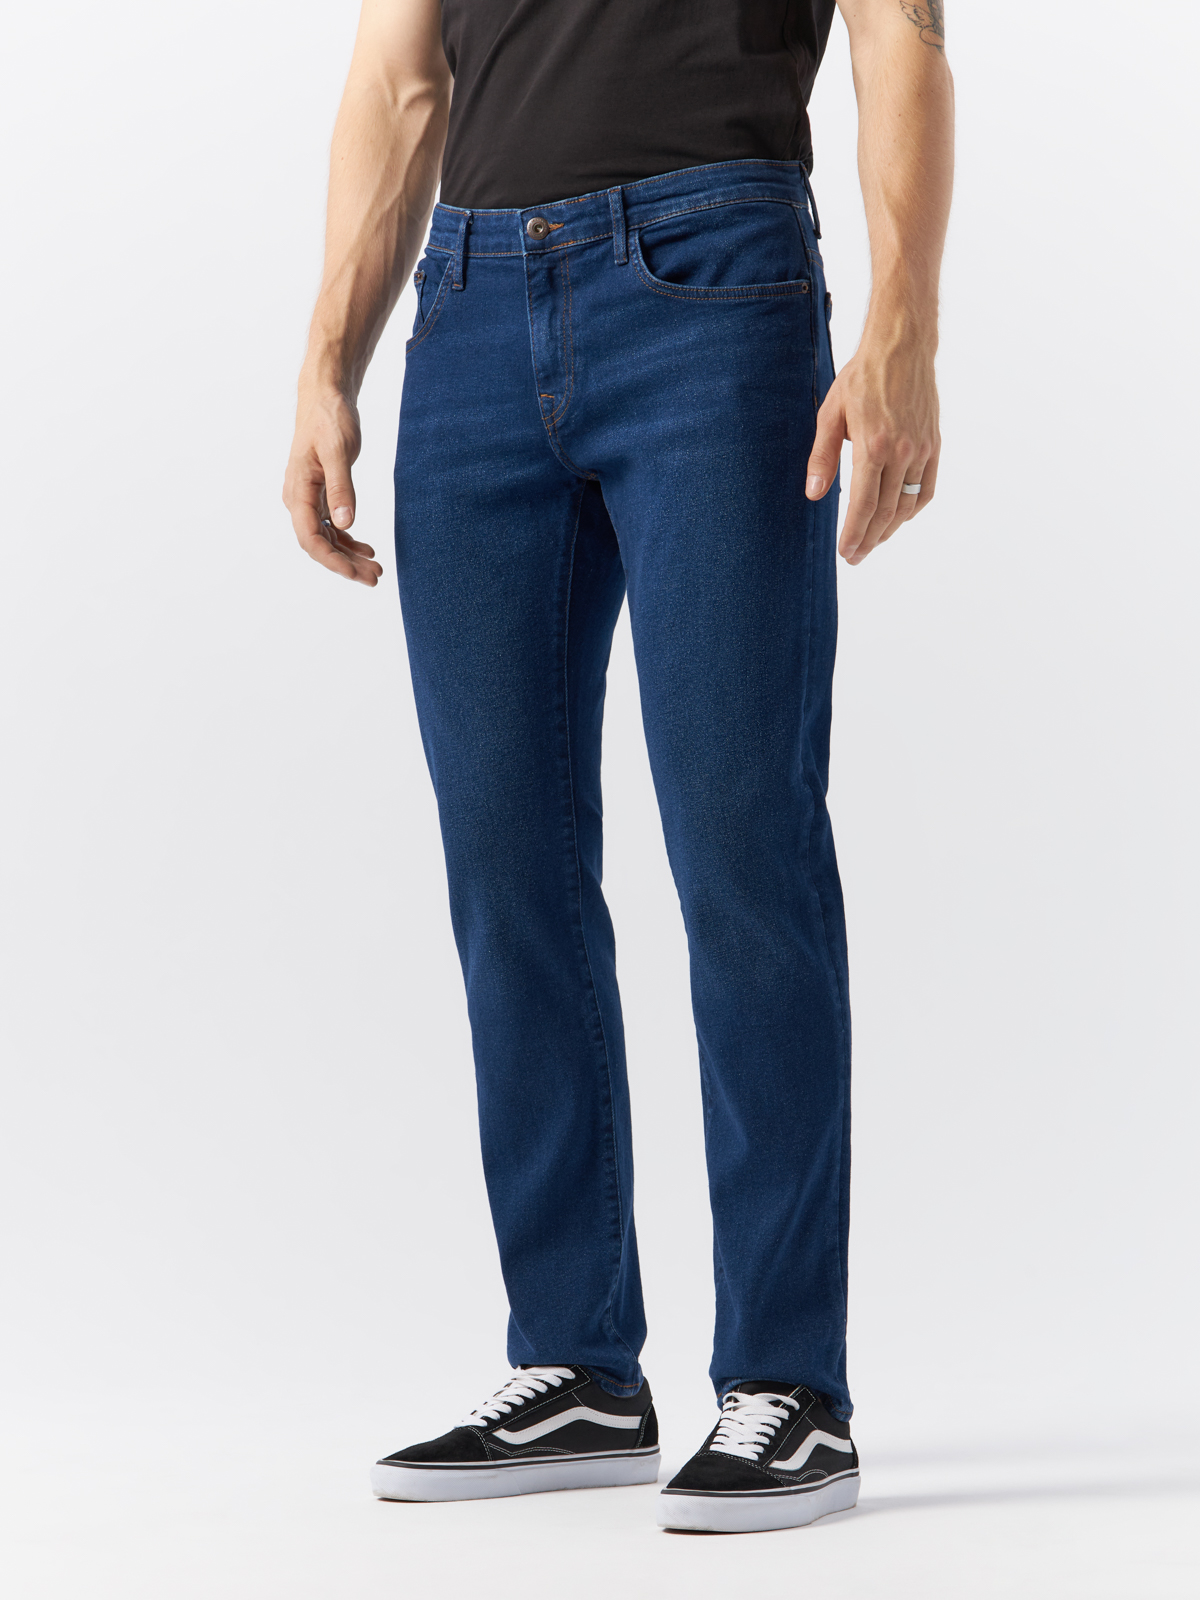 Джинсы Cross Jeans для мужчин, F 152-133, размер 29-32, синие